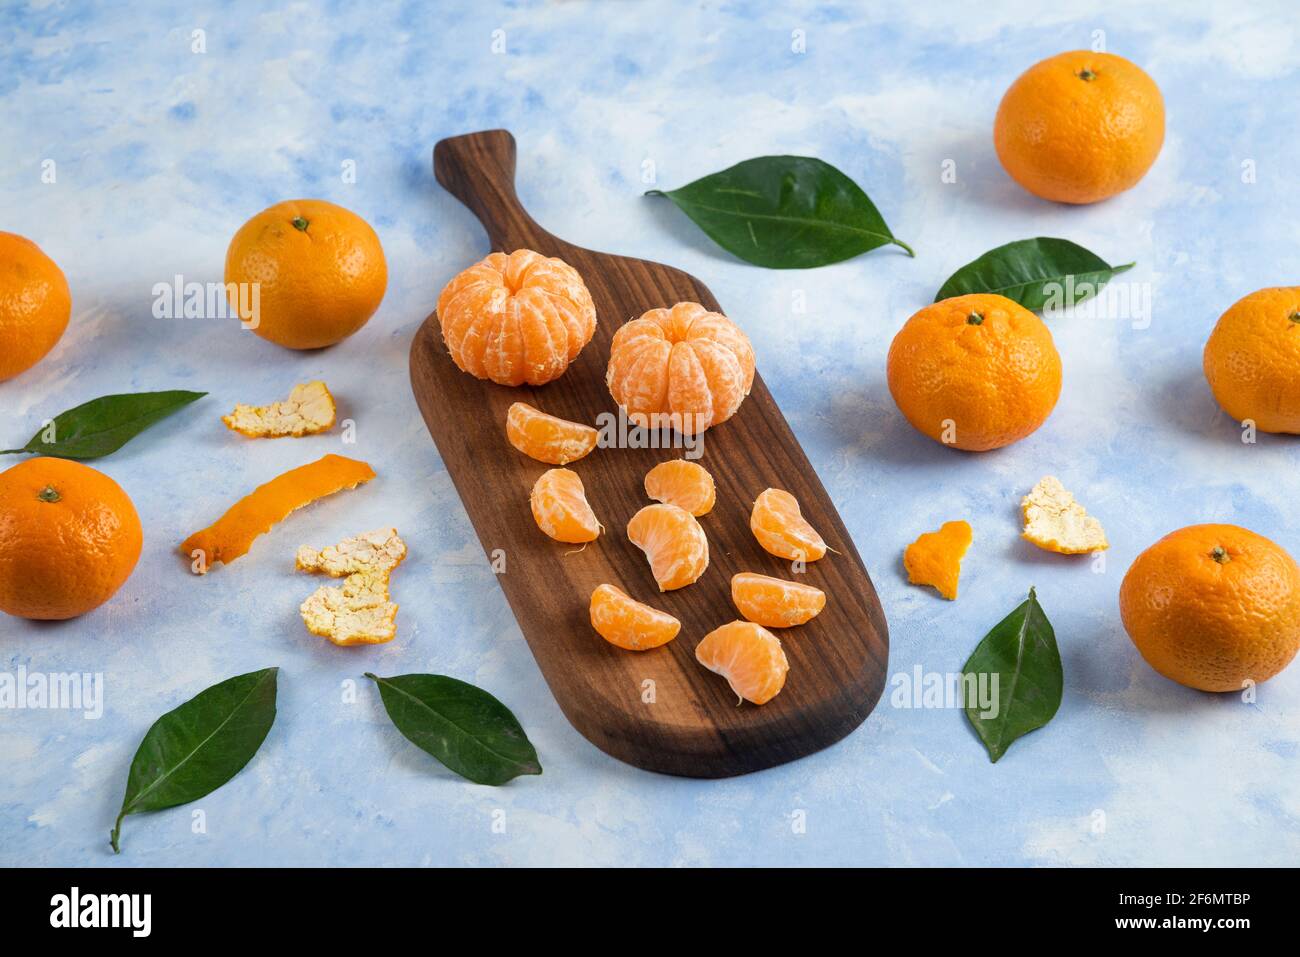 Pile of clementine mandarins whole or peeled Stock Photo